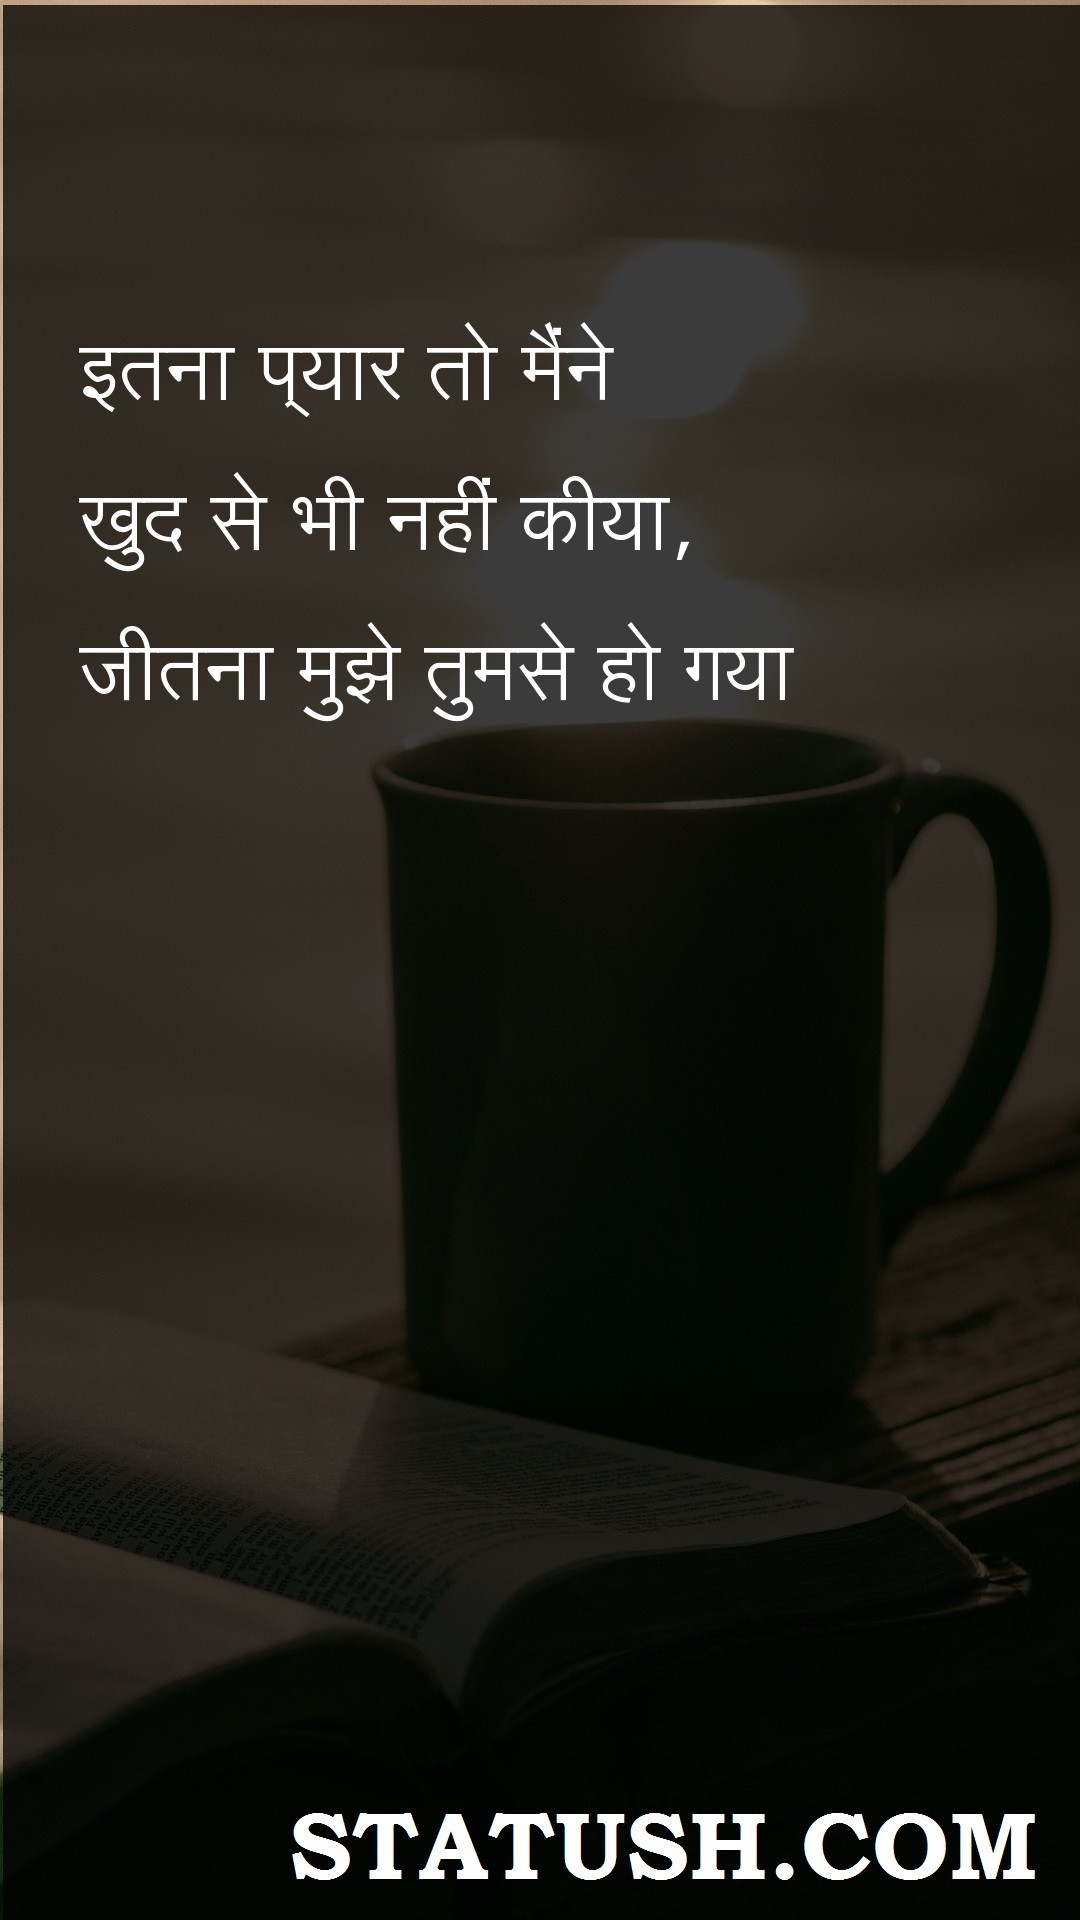 I have not loved myself - Hindi Quotes at statush.com